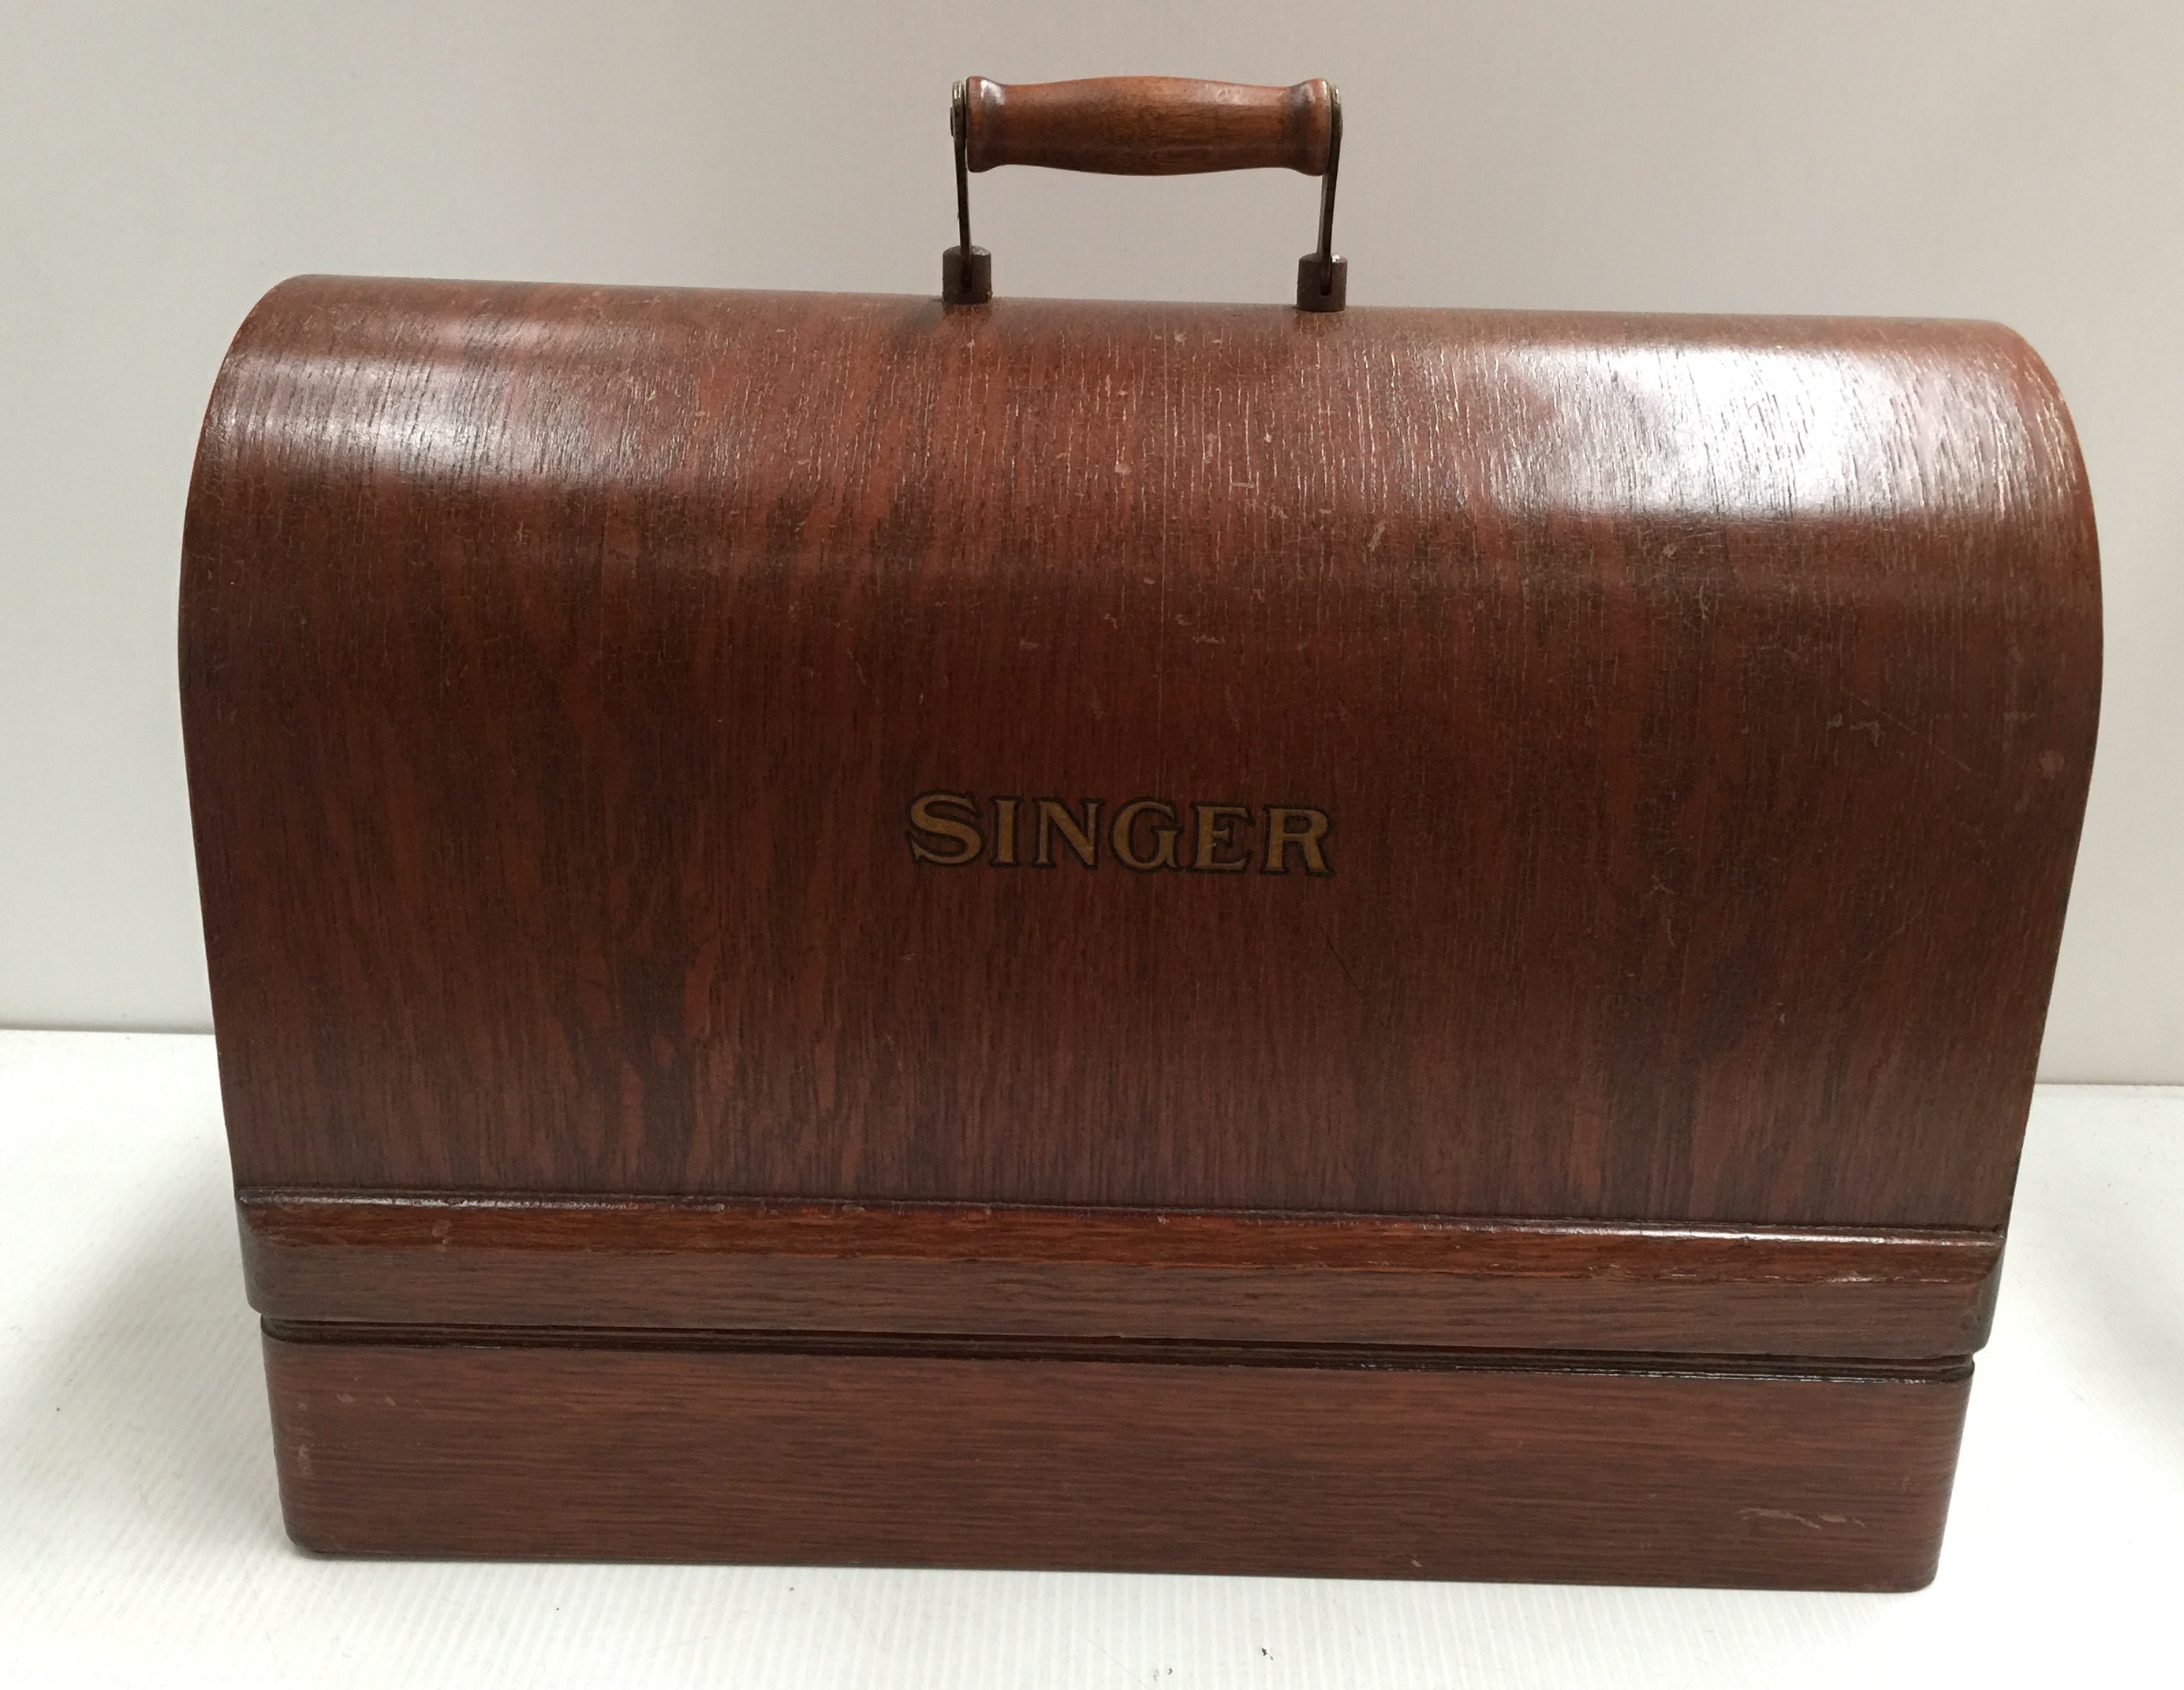 Singer manual sewing machine in wooden case [locked]